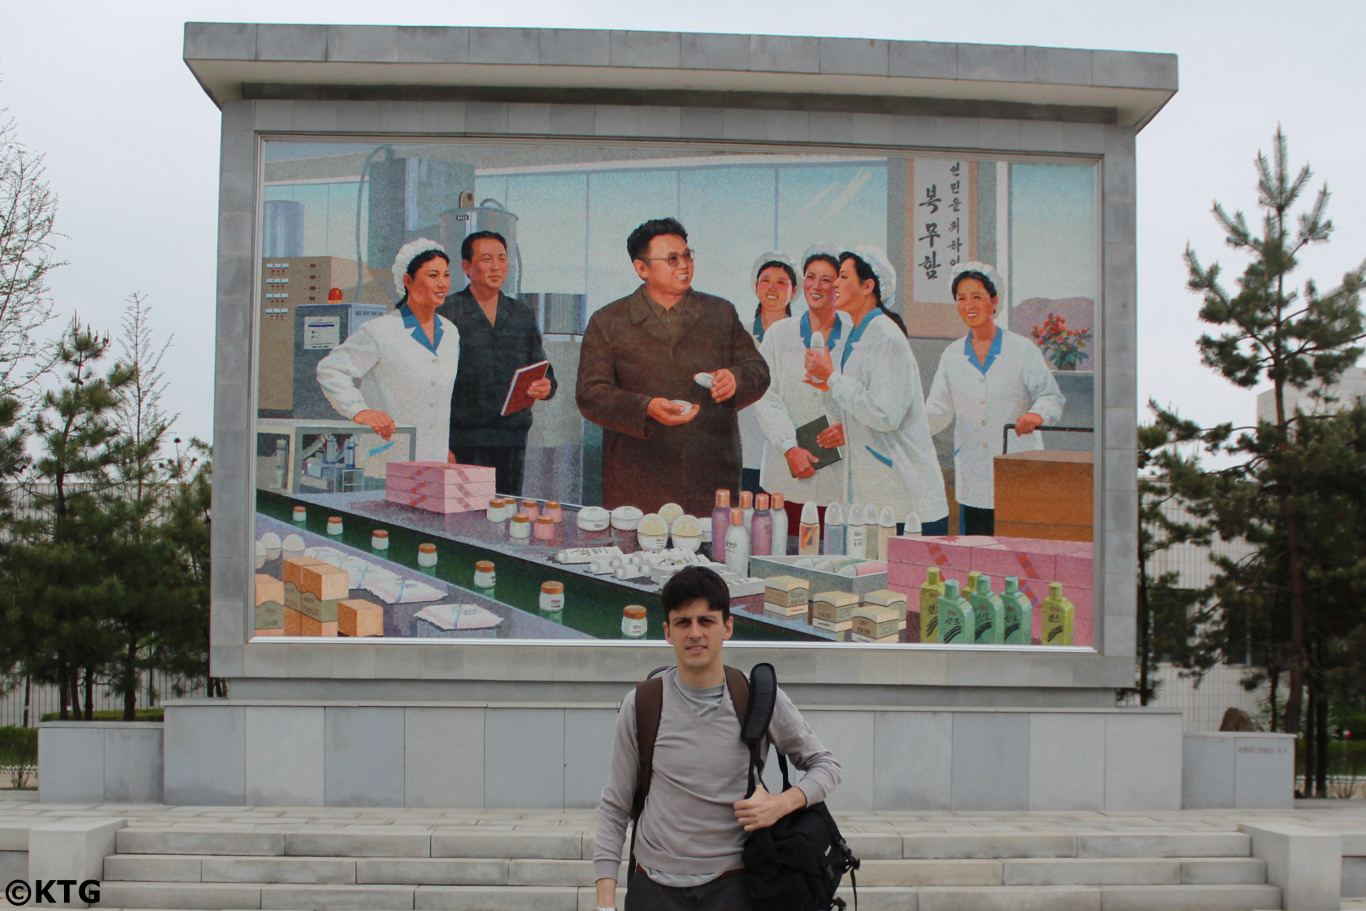 Sinuiju cosmetics factory, North Korea, with KTG Tours